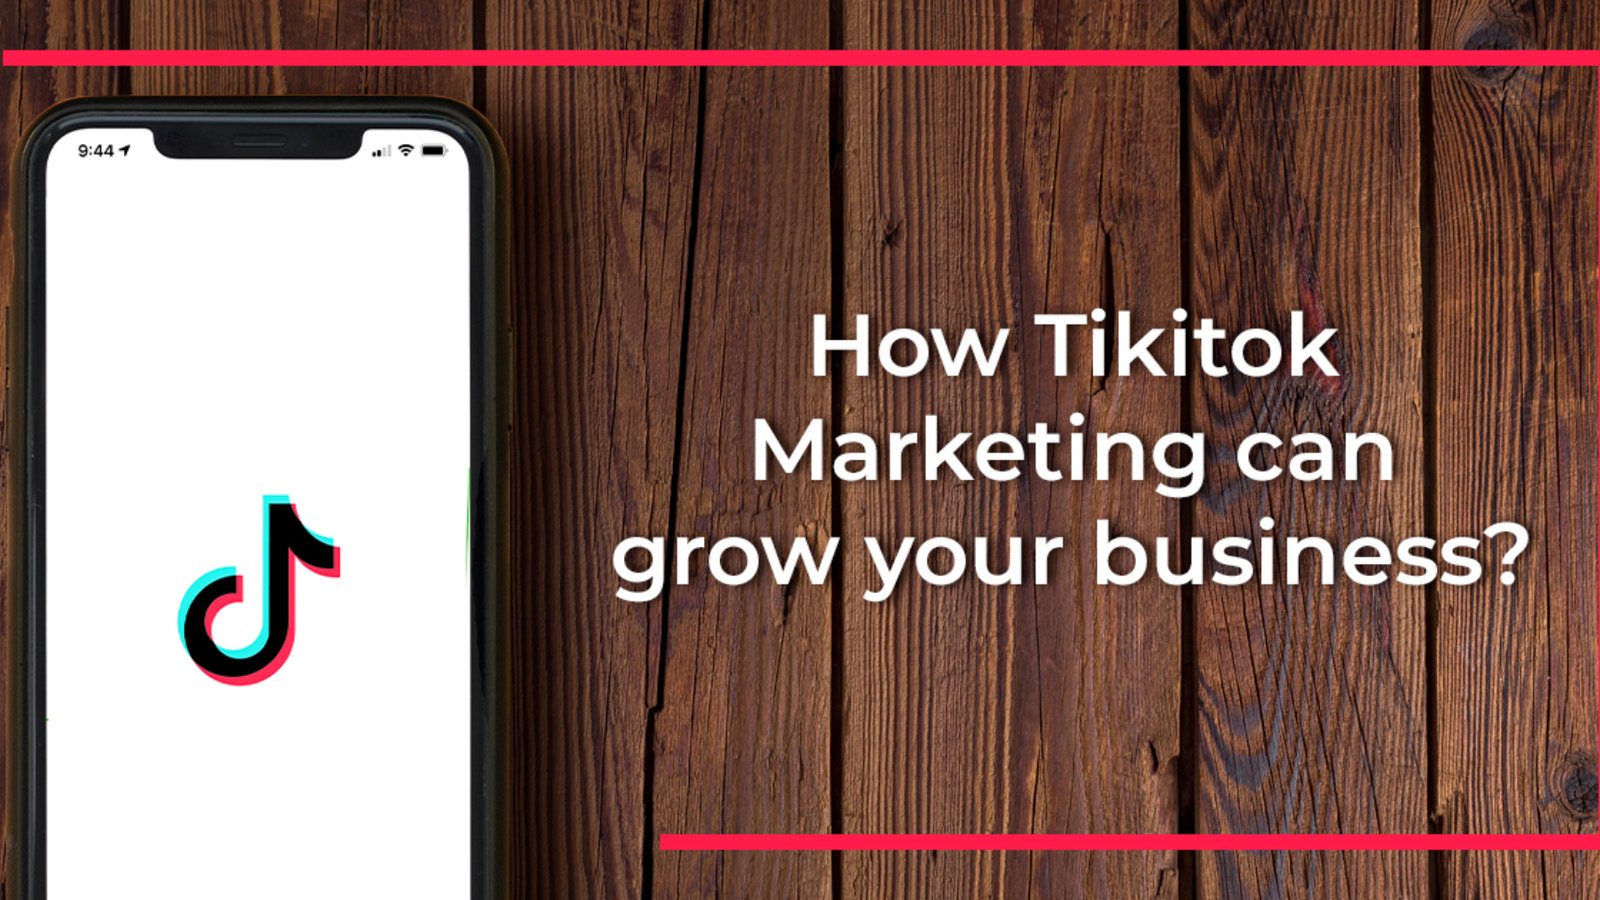 How Tiktok Marketing can grow your business